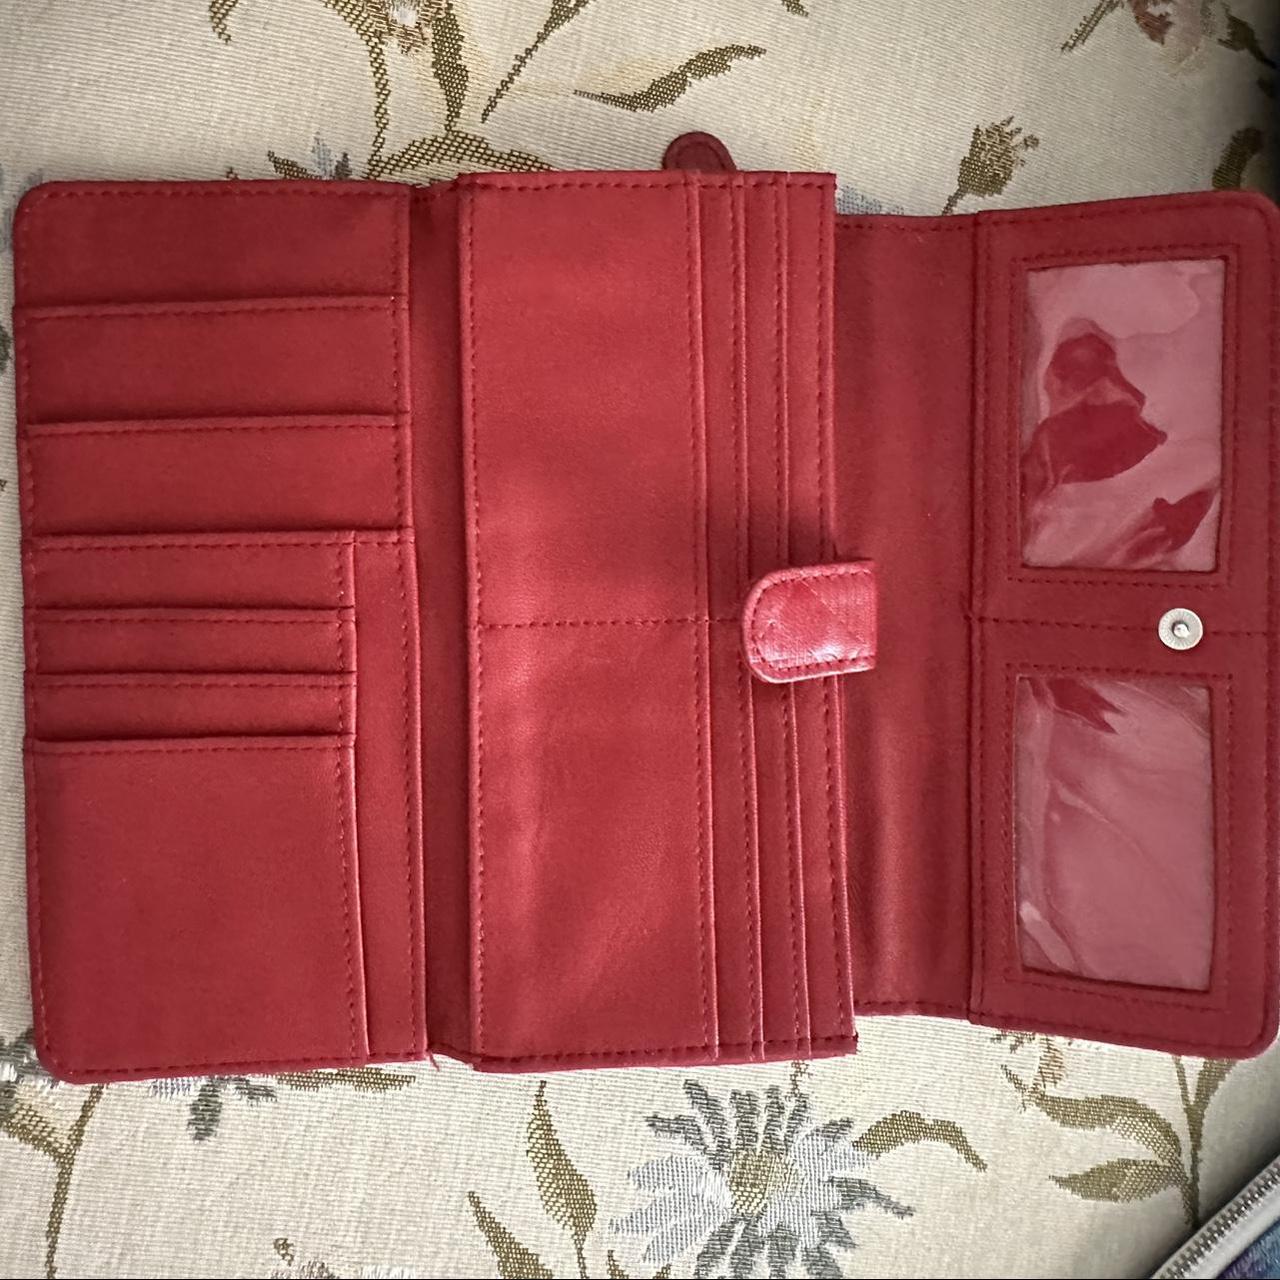 Giani Bernini Red Leather Crossbody Wallet on a - Depop